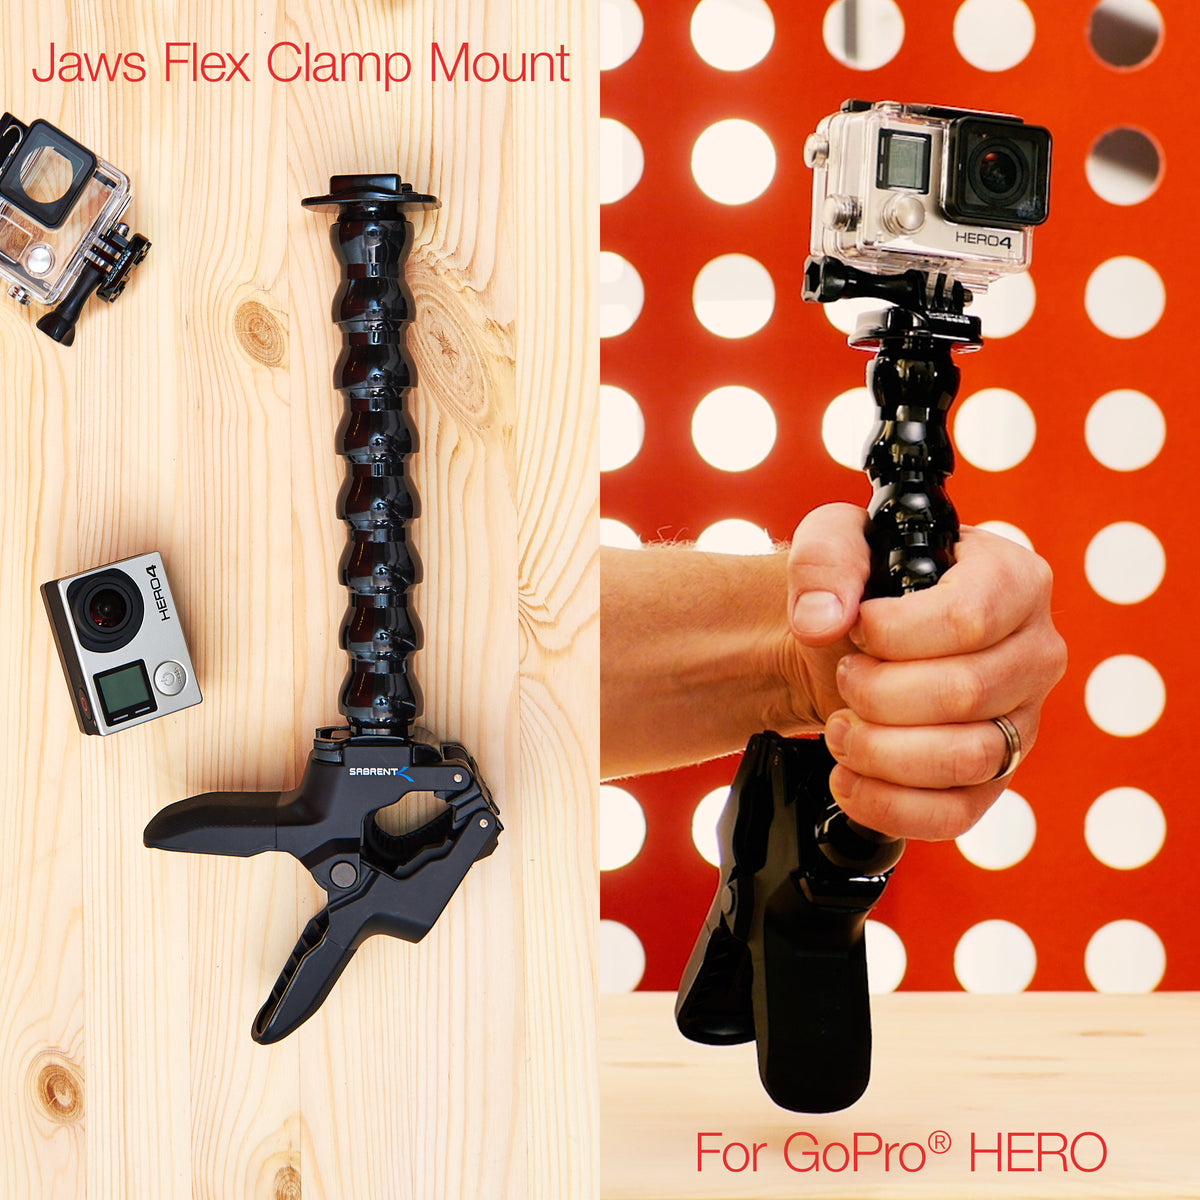 Adjustable Jaws Flex Clamp Mount for GoPro Cameras